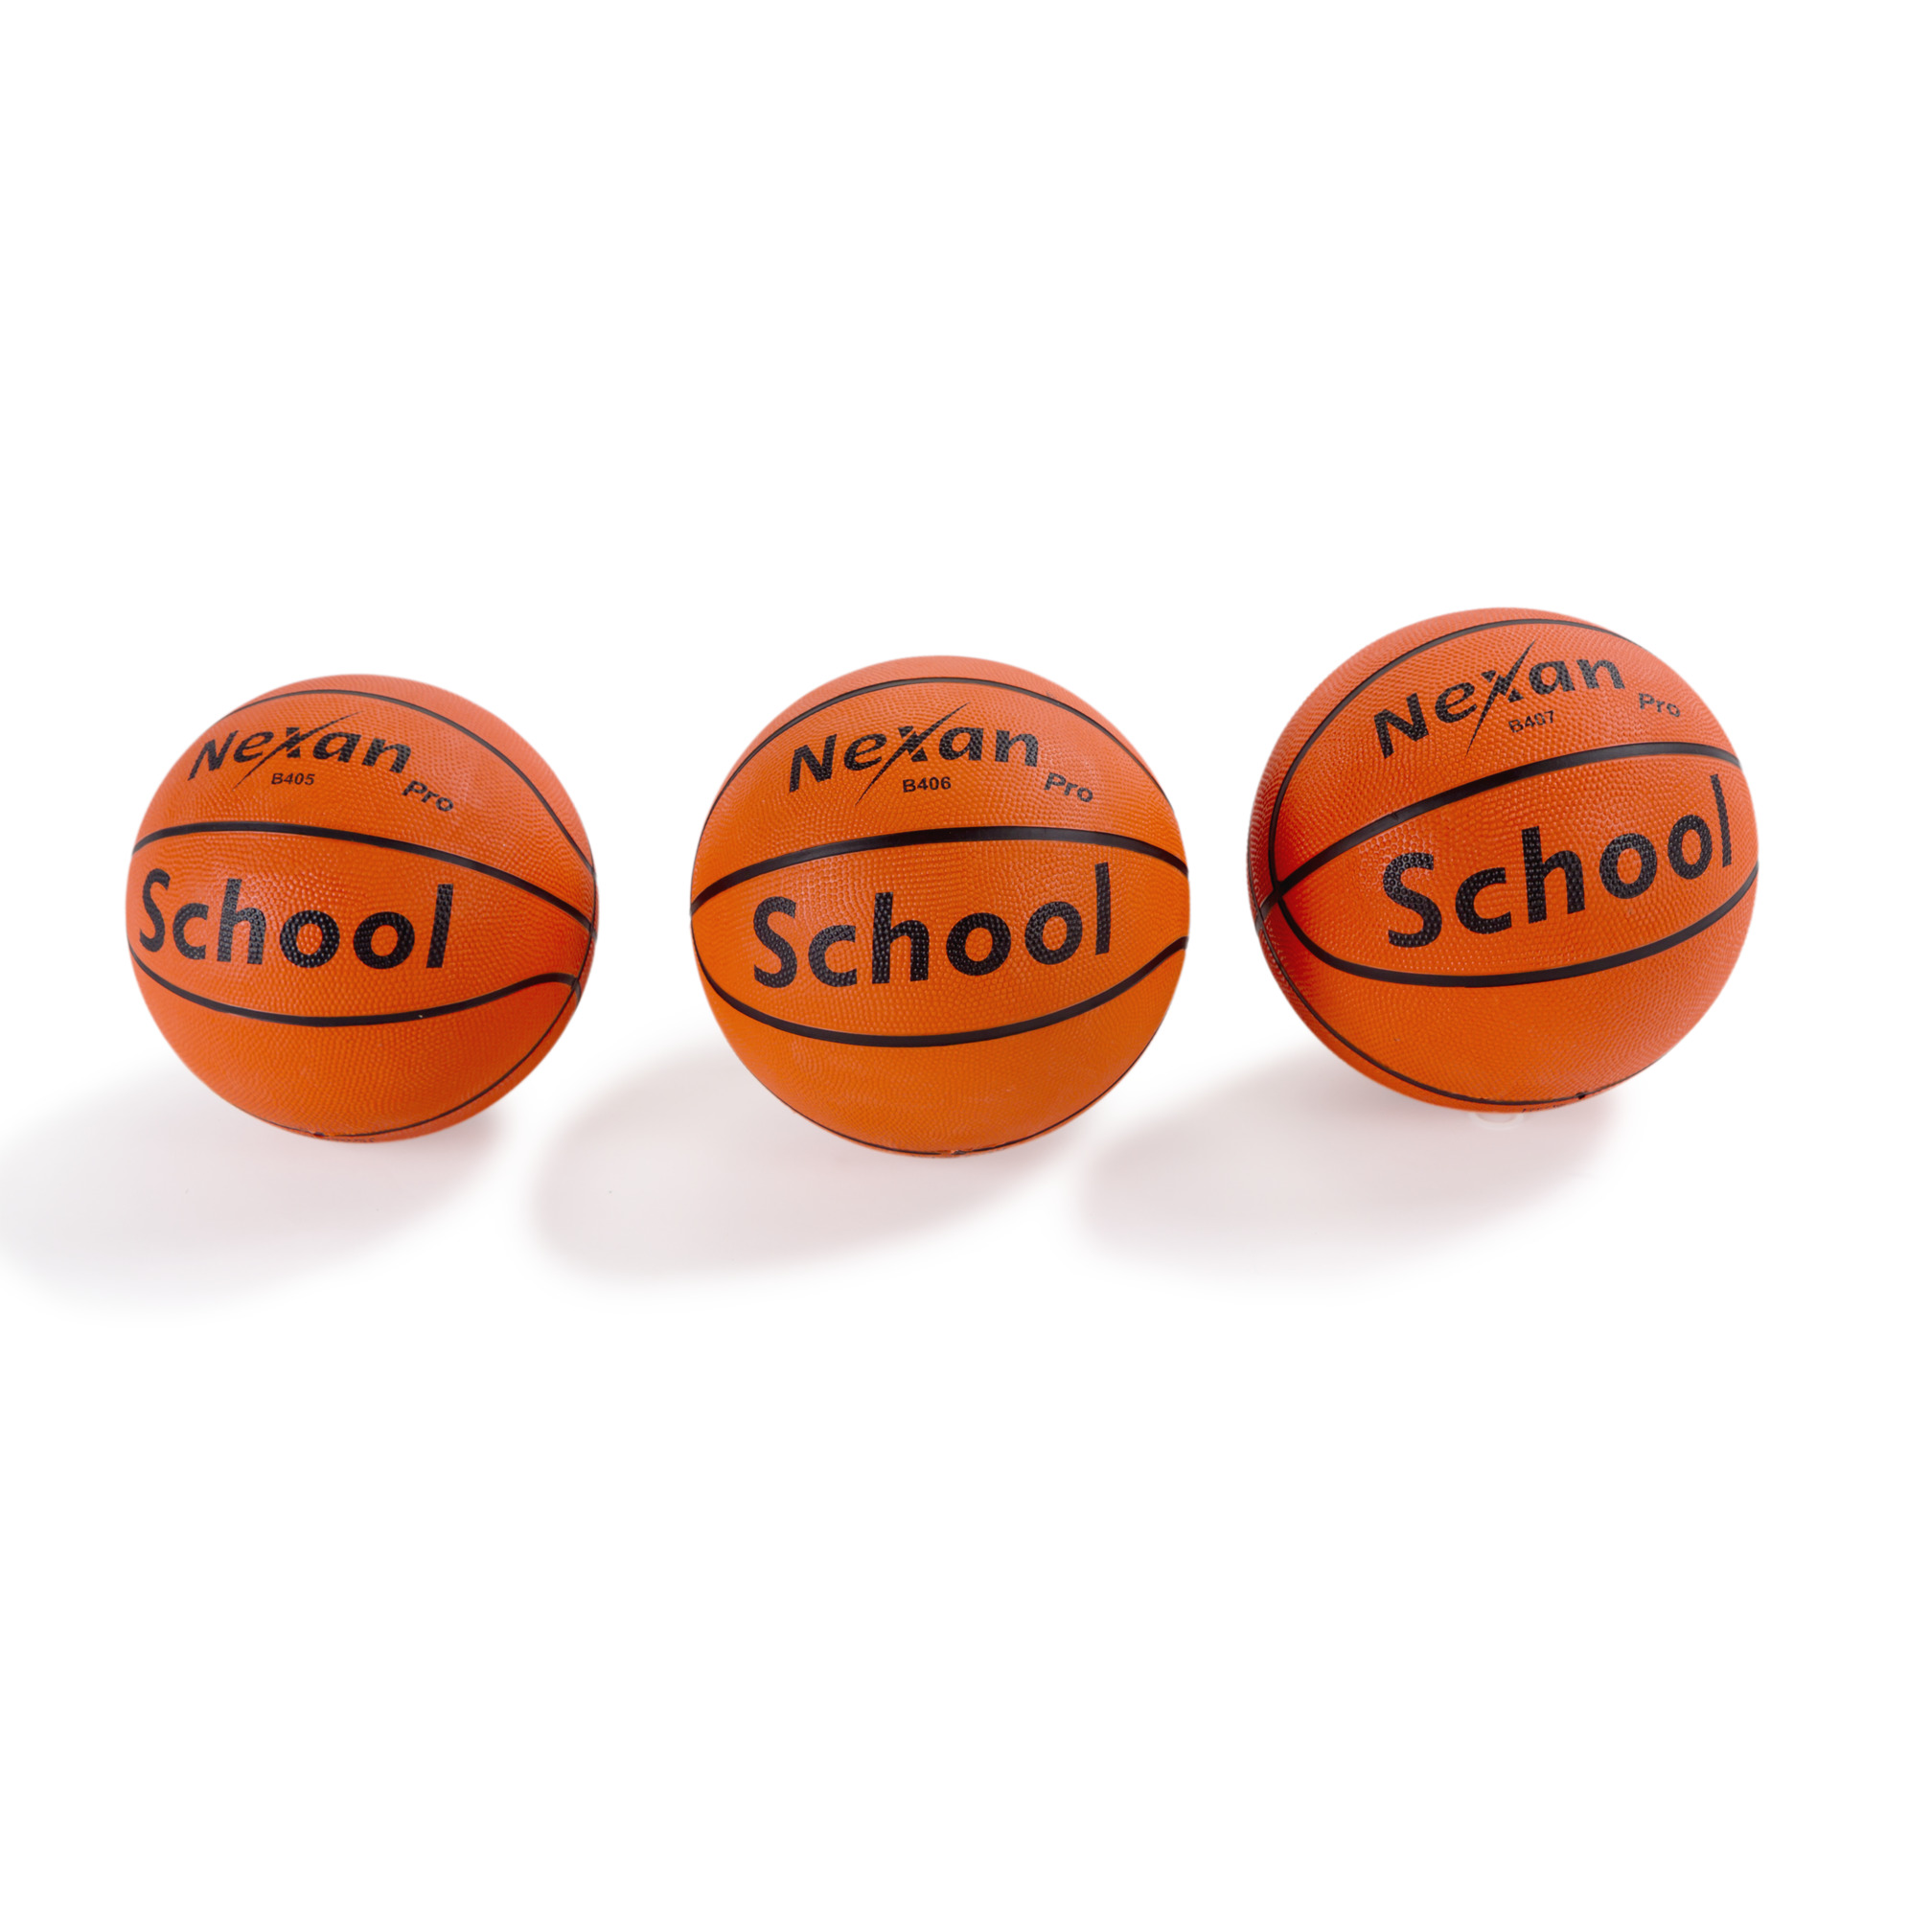 Nexan Basketball SCHOOL, size 7